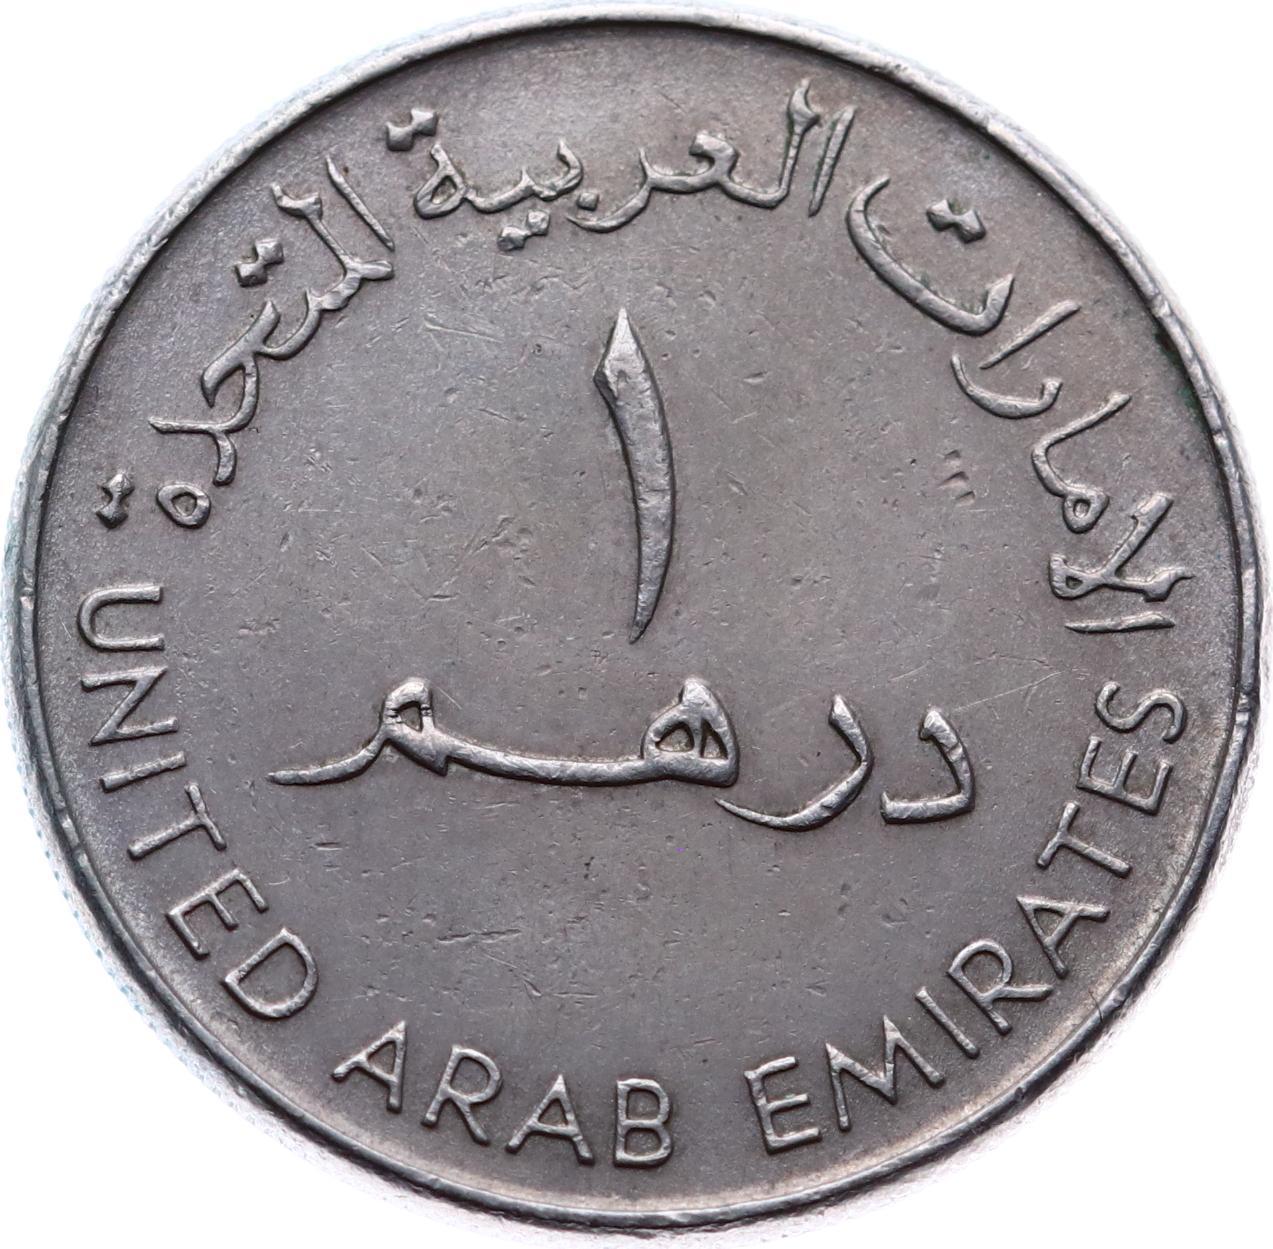 40000 дирхам. Монета United arab Emirates 2007 1428. Arab Emirates монета. United arab Emirates монета 1. Монета United arab Emirates 1993-1998.